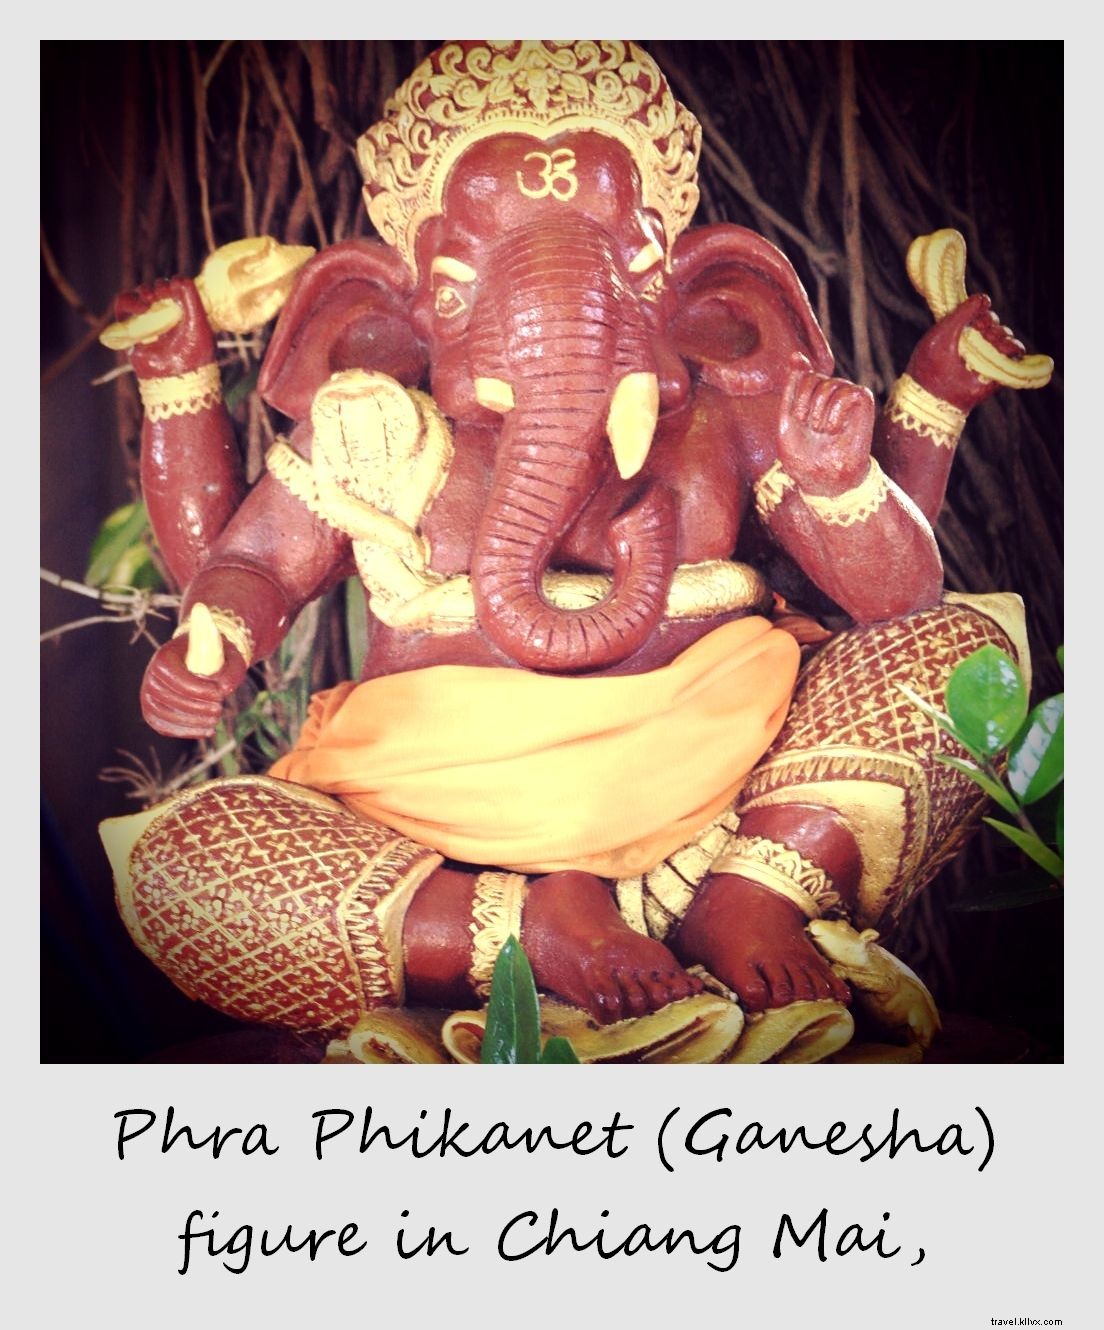 Polaroid minggu ini:Phra Phikanet (Ganesha) di Chiang Mai, Thailand